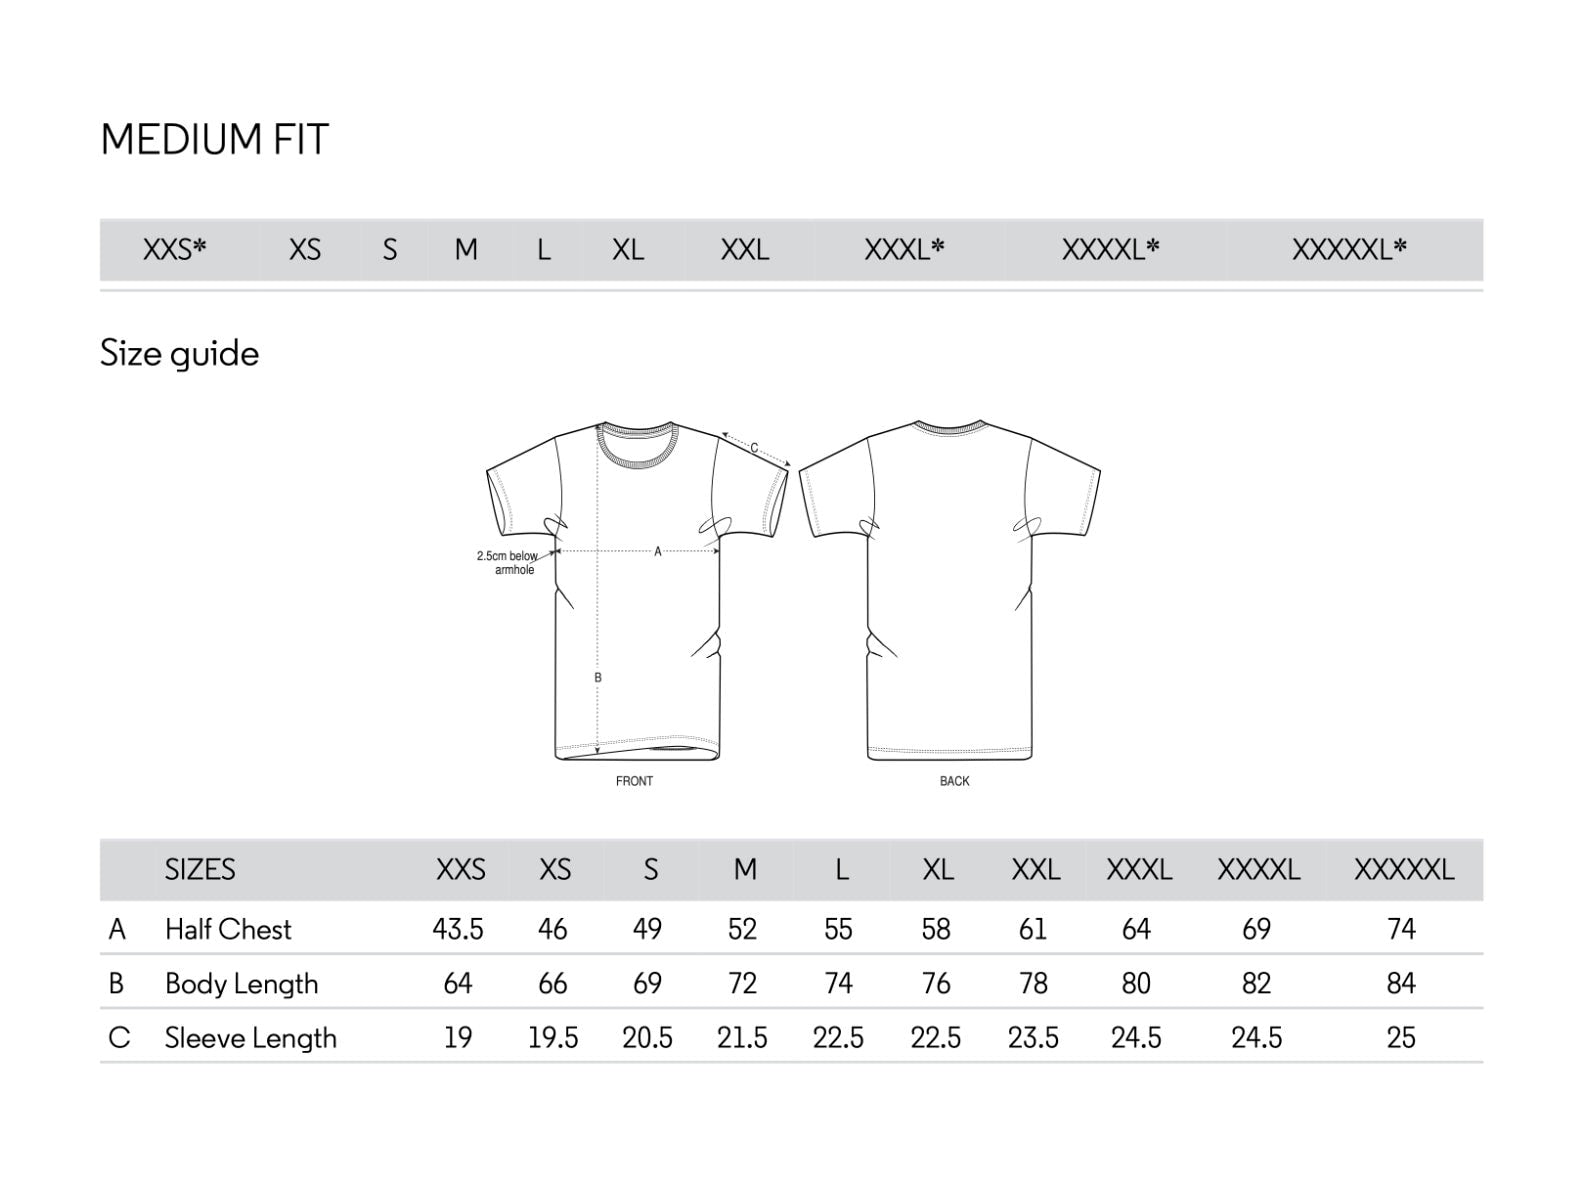 ADOLPHE MILLOT - Mushroom Chart T-Shirt - Pathos Studio - T-Shirts